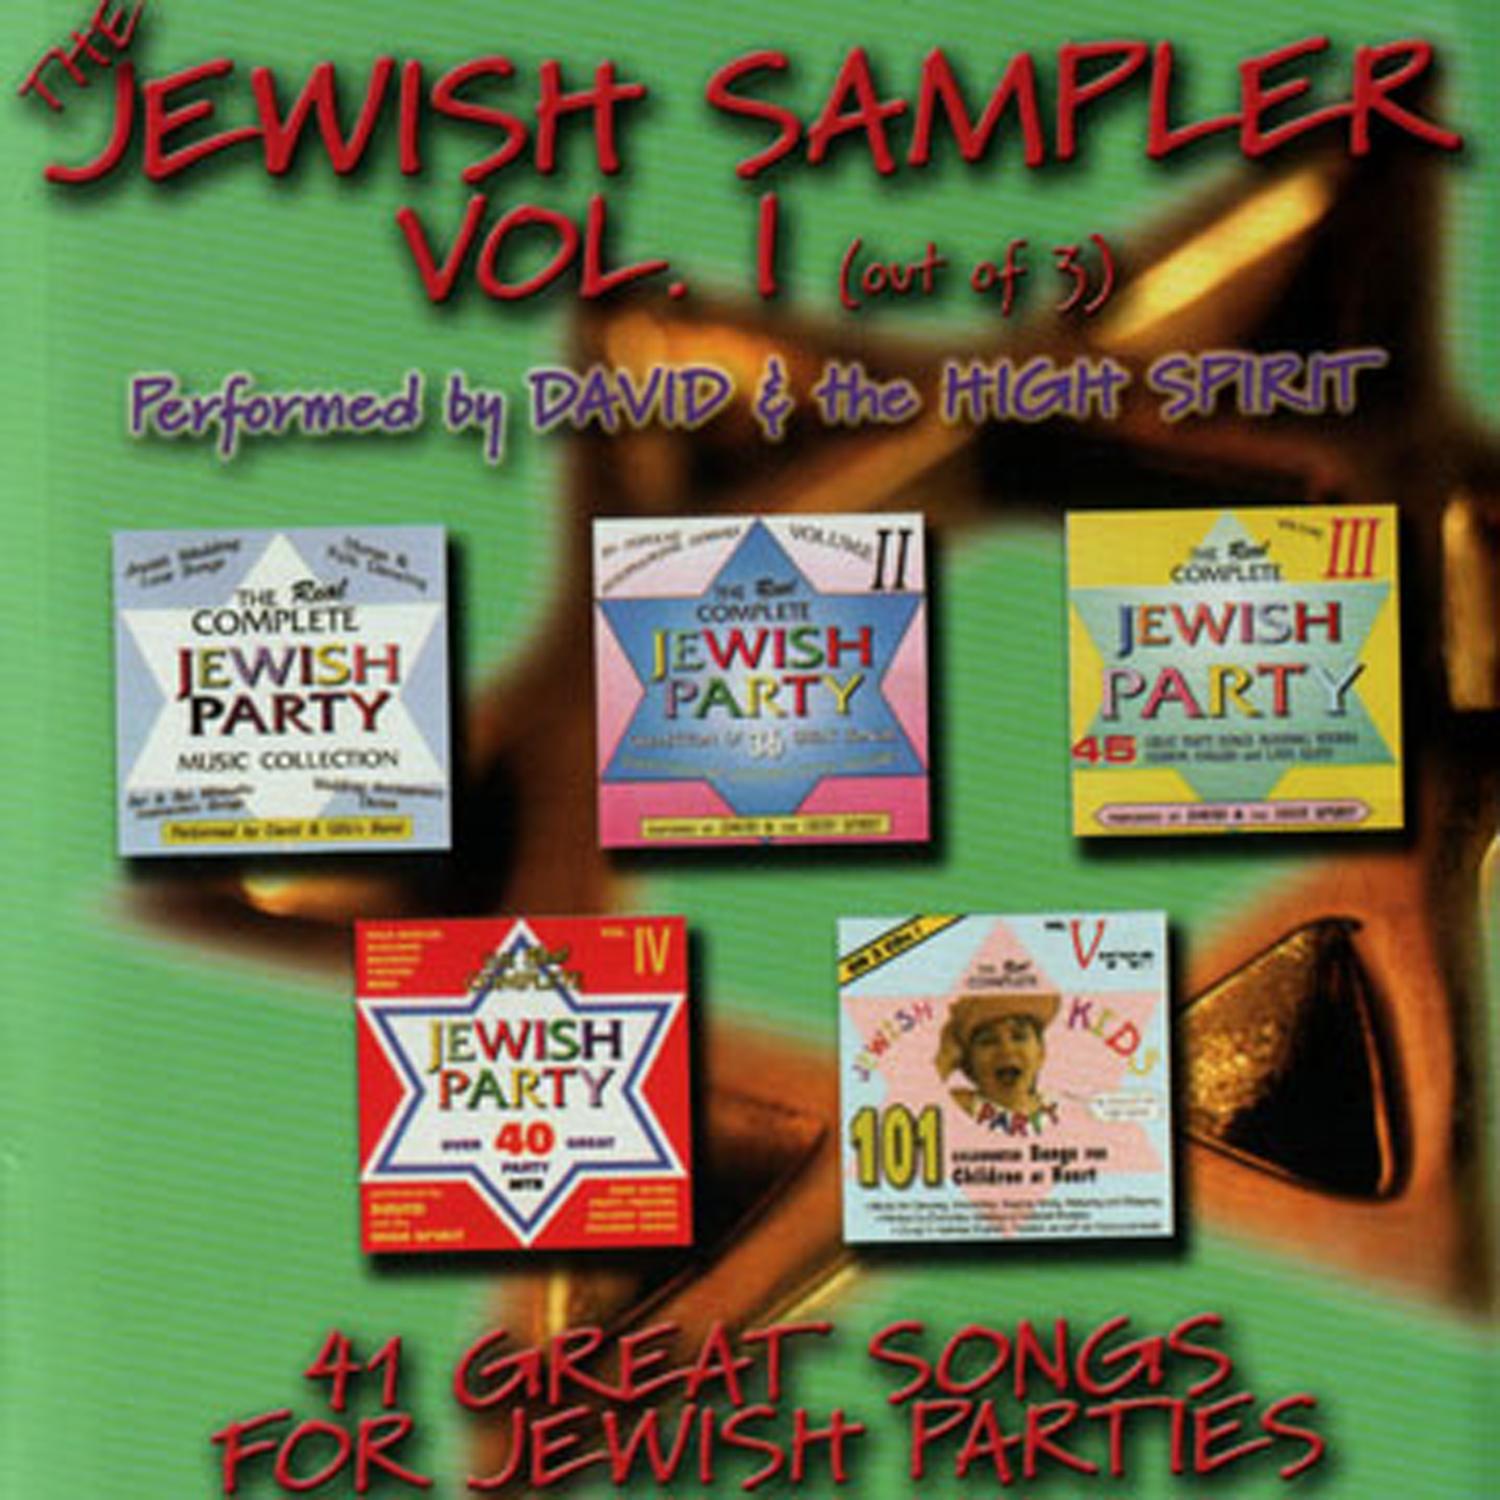 The Jewish Sampler Vol 1